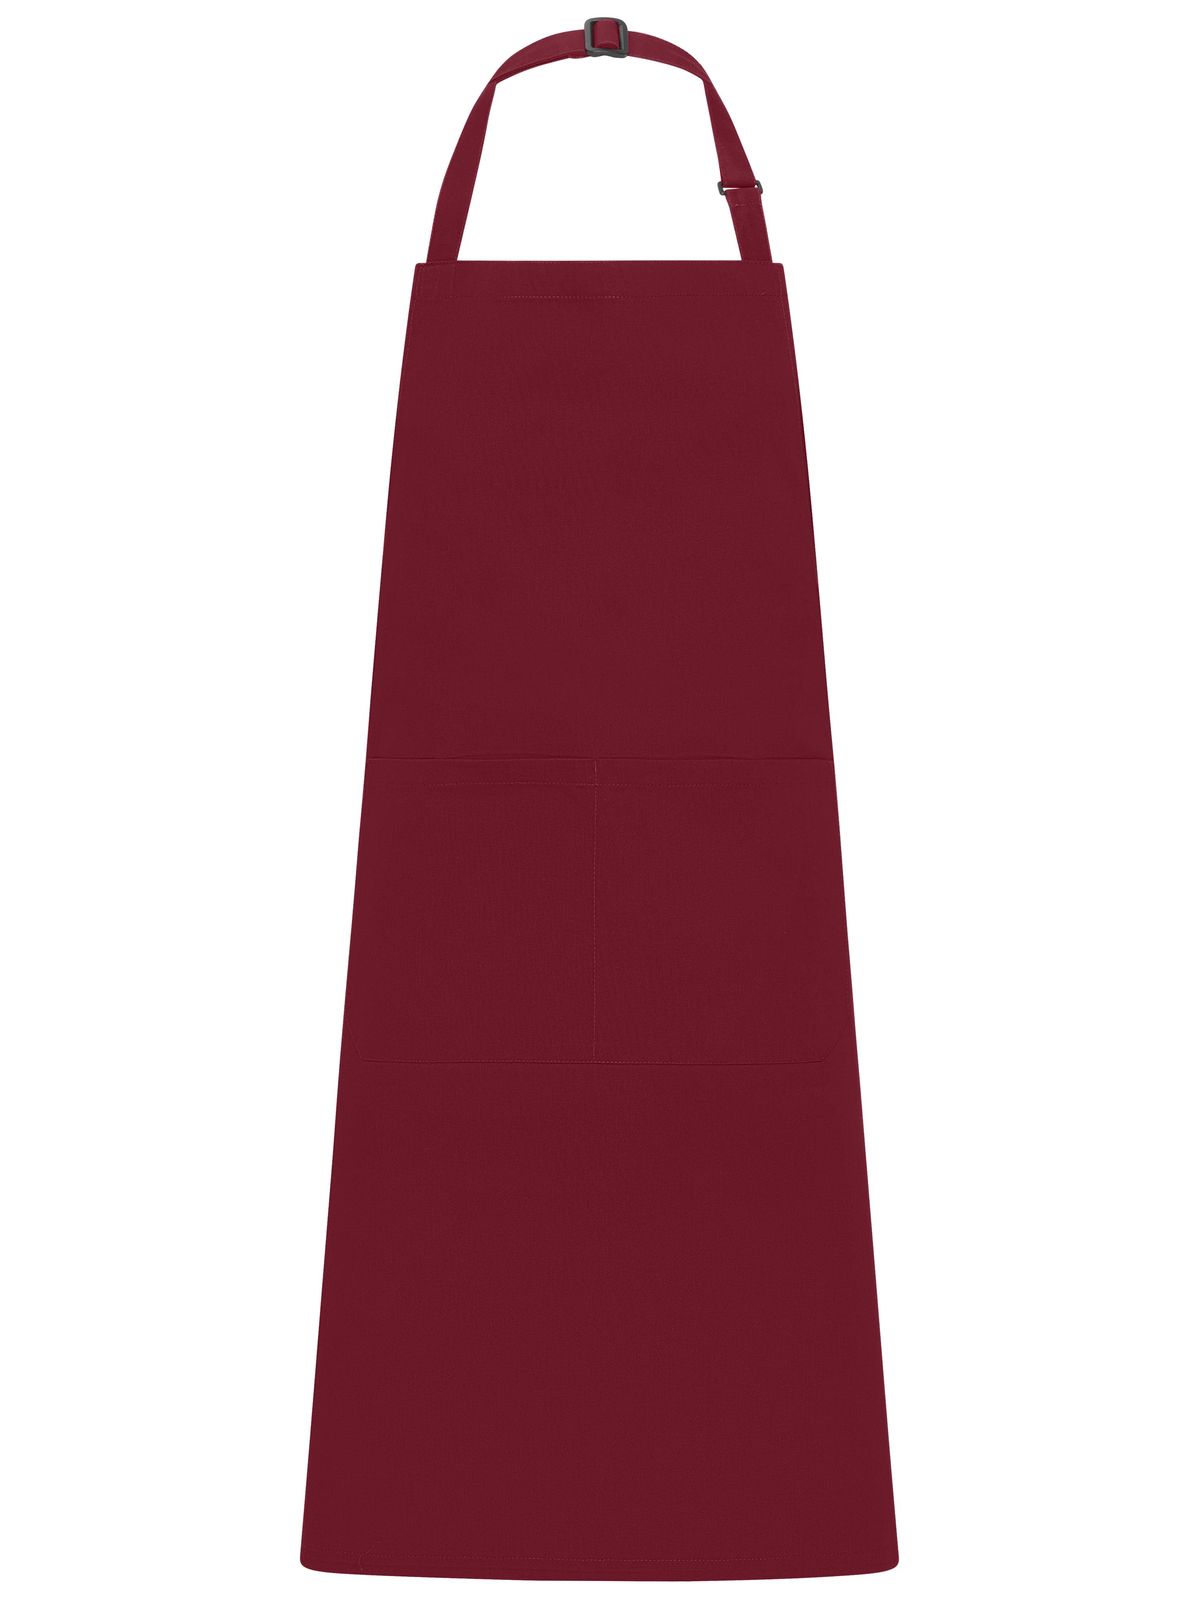 apron-with-bib-wine.webp